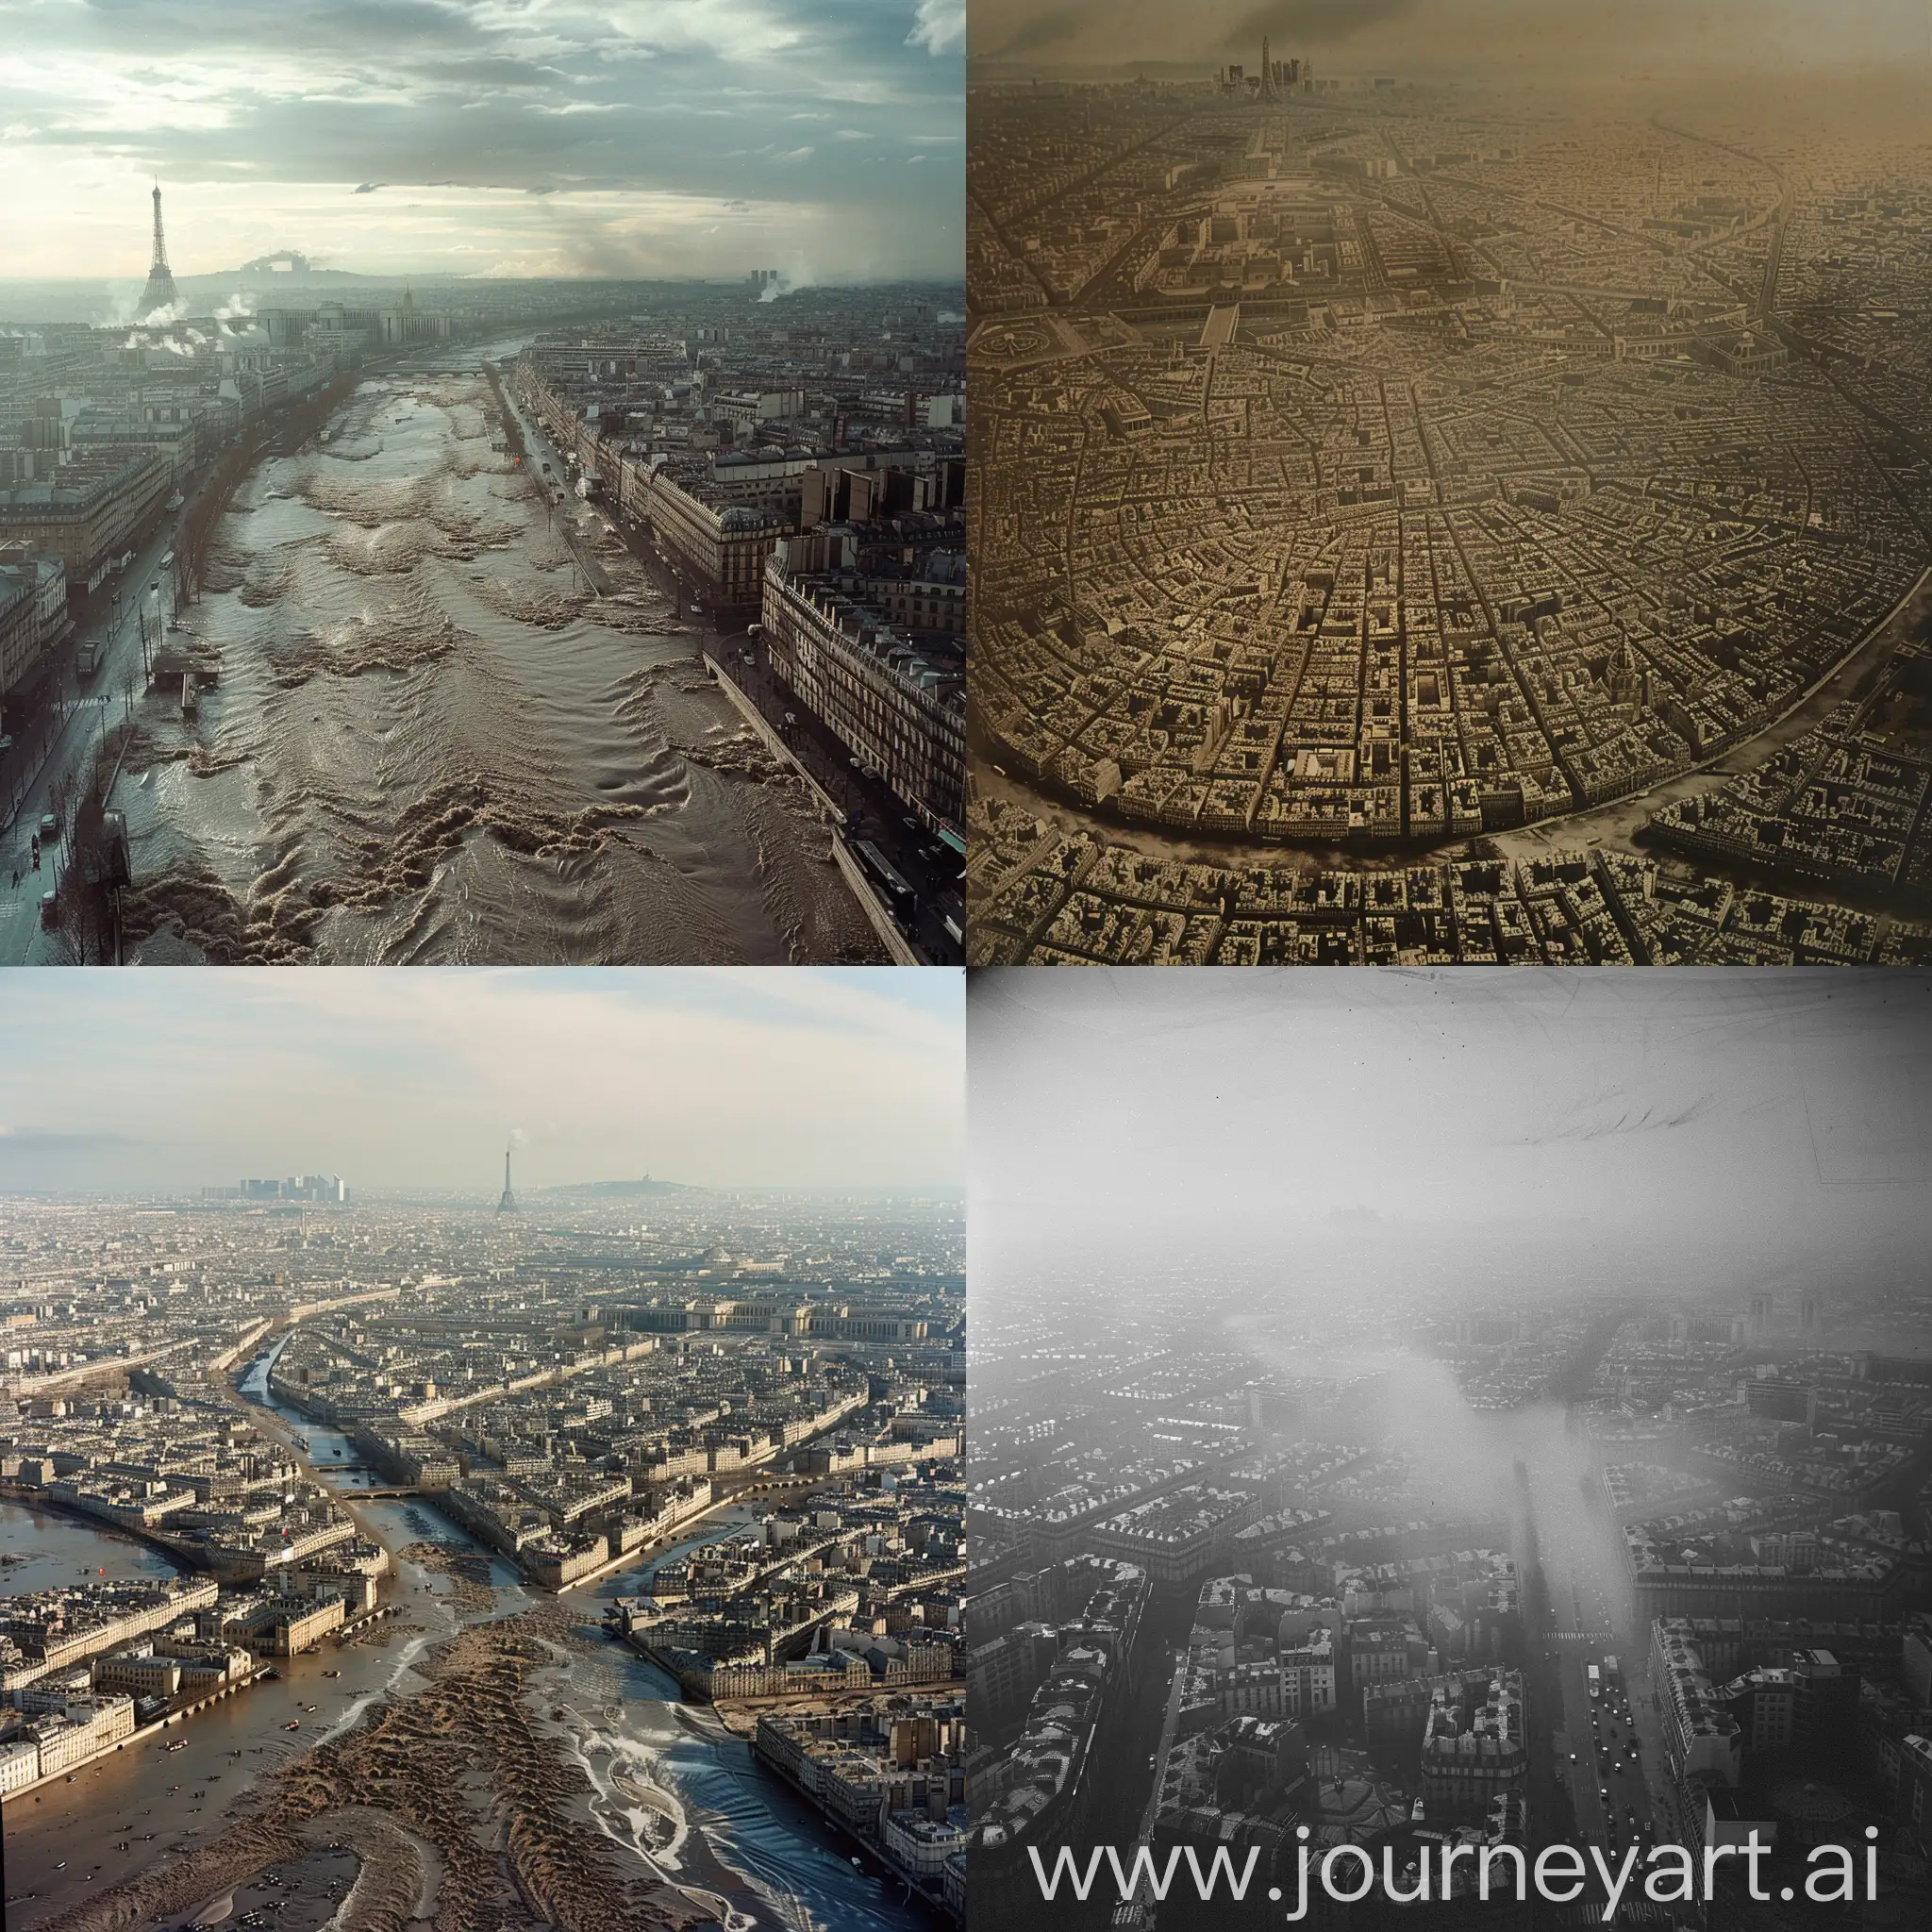 Paris-Drought-Cityscape-Striking-Visuals-of-Arid-Urban-Landscape